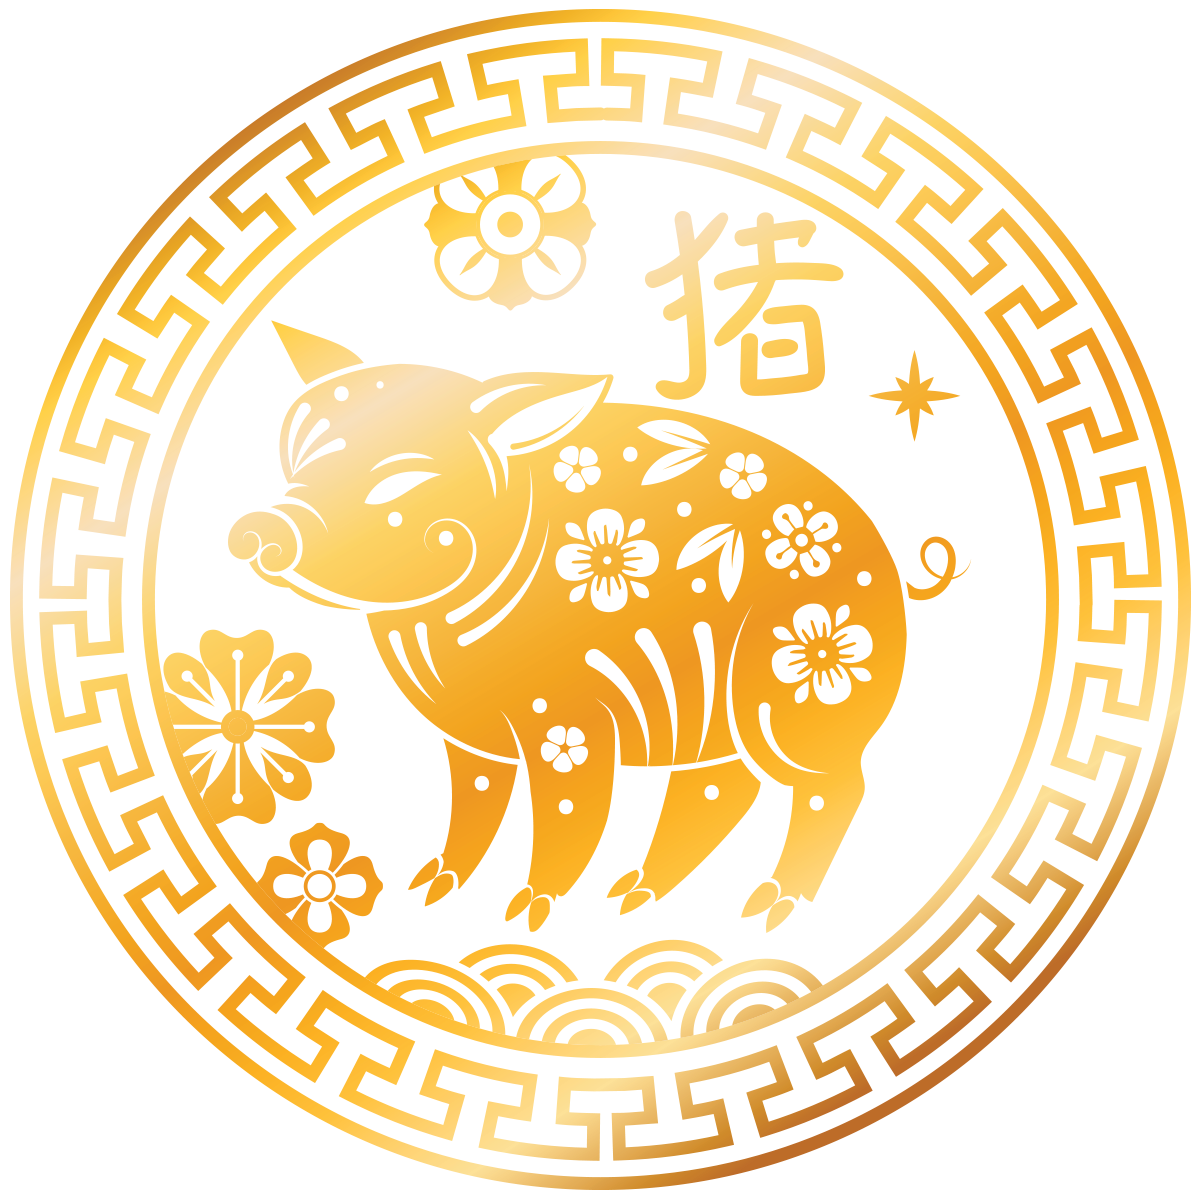 China Sichuan Horoscopes: The Pig